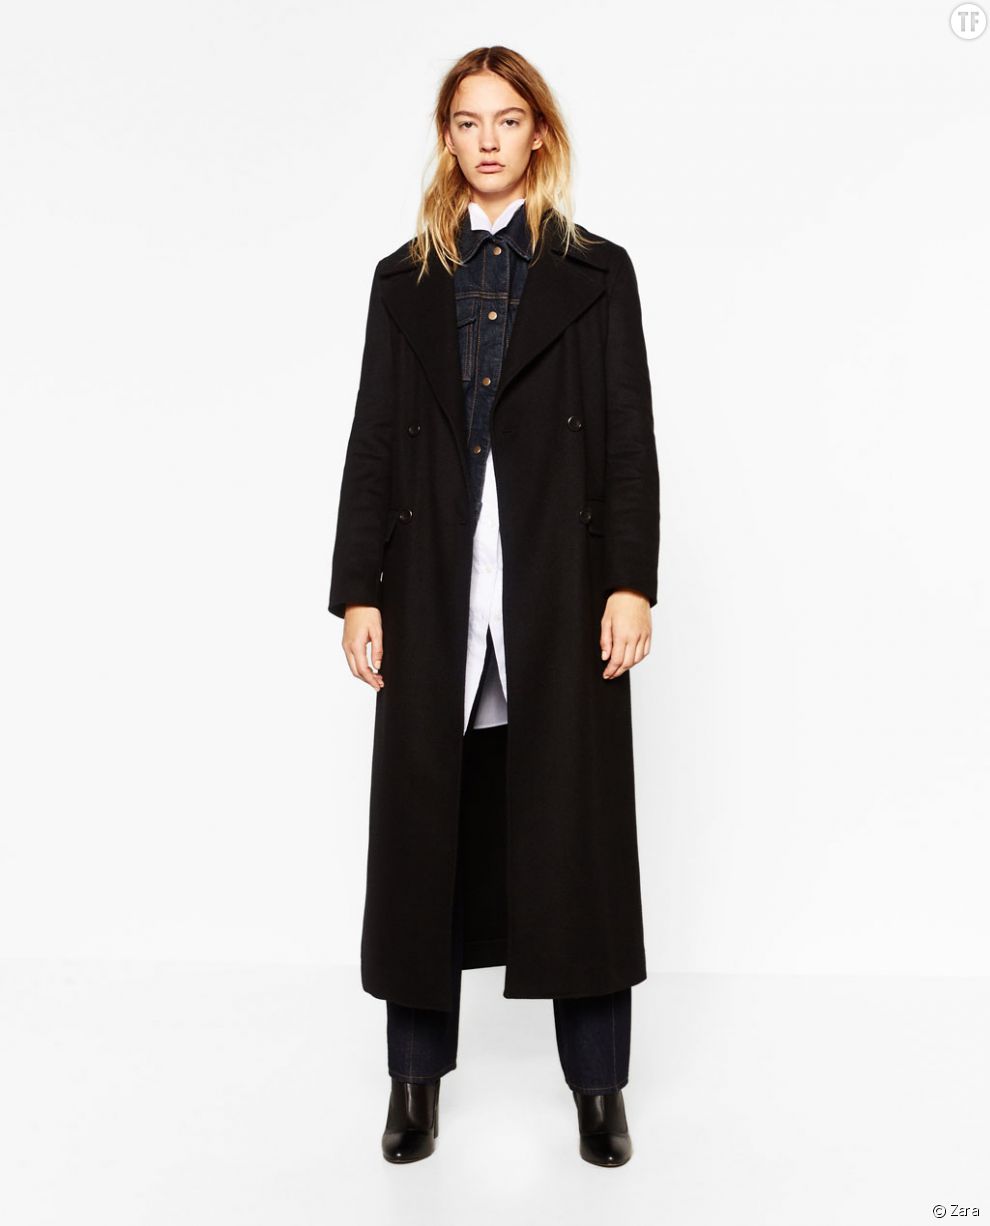  Redingote noire en laine Zara 159 euros 